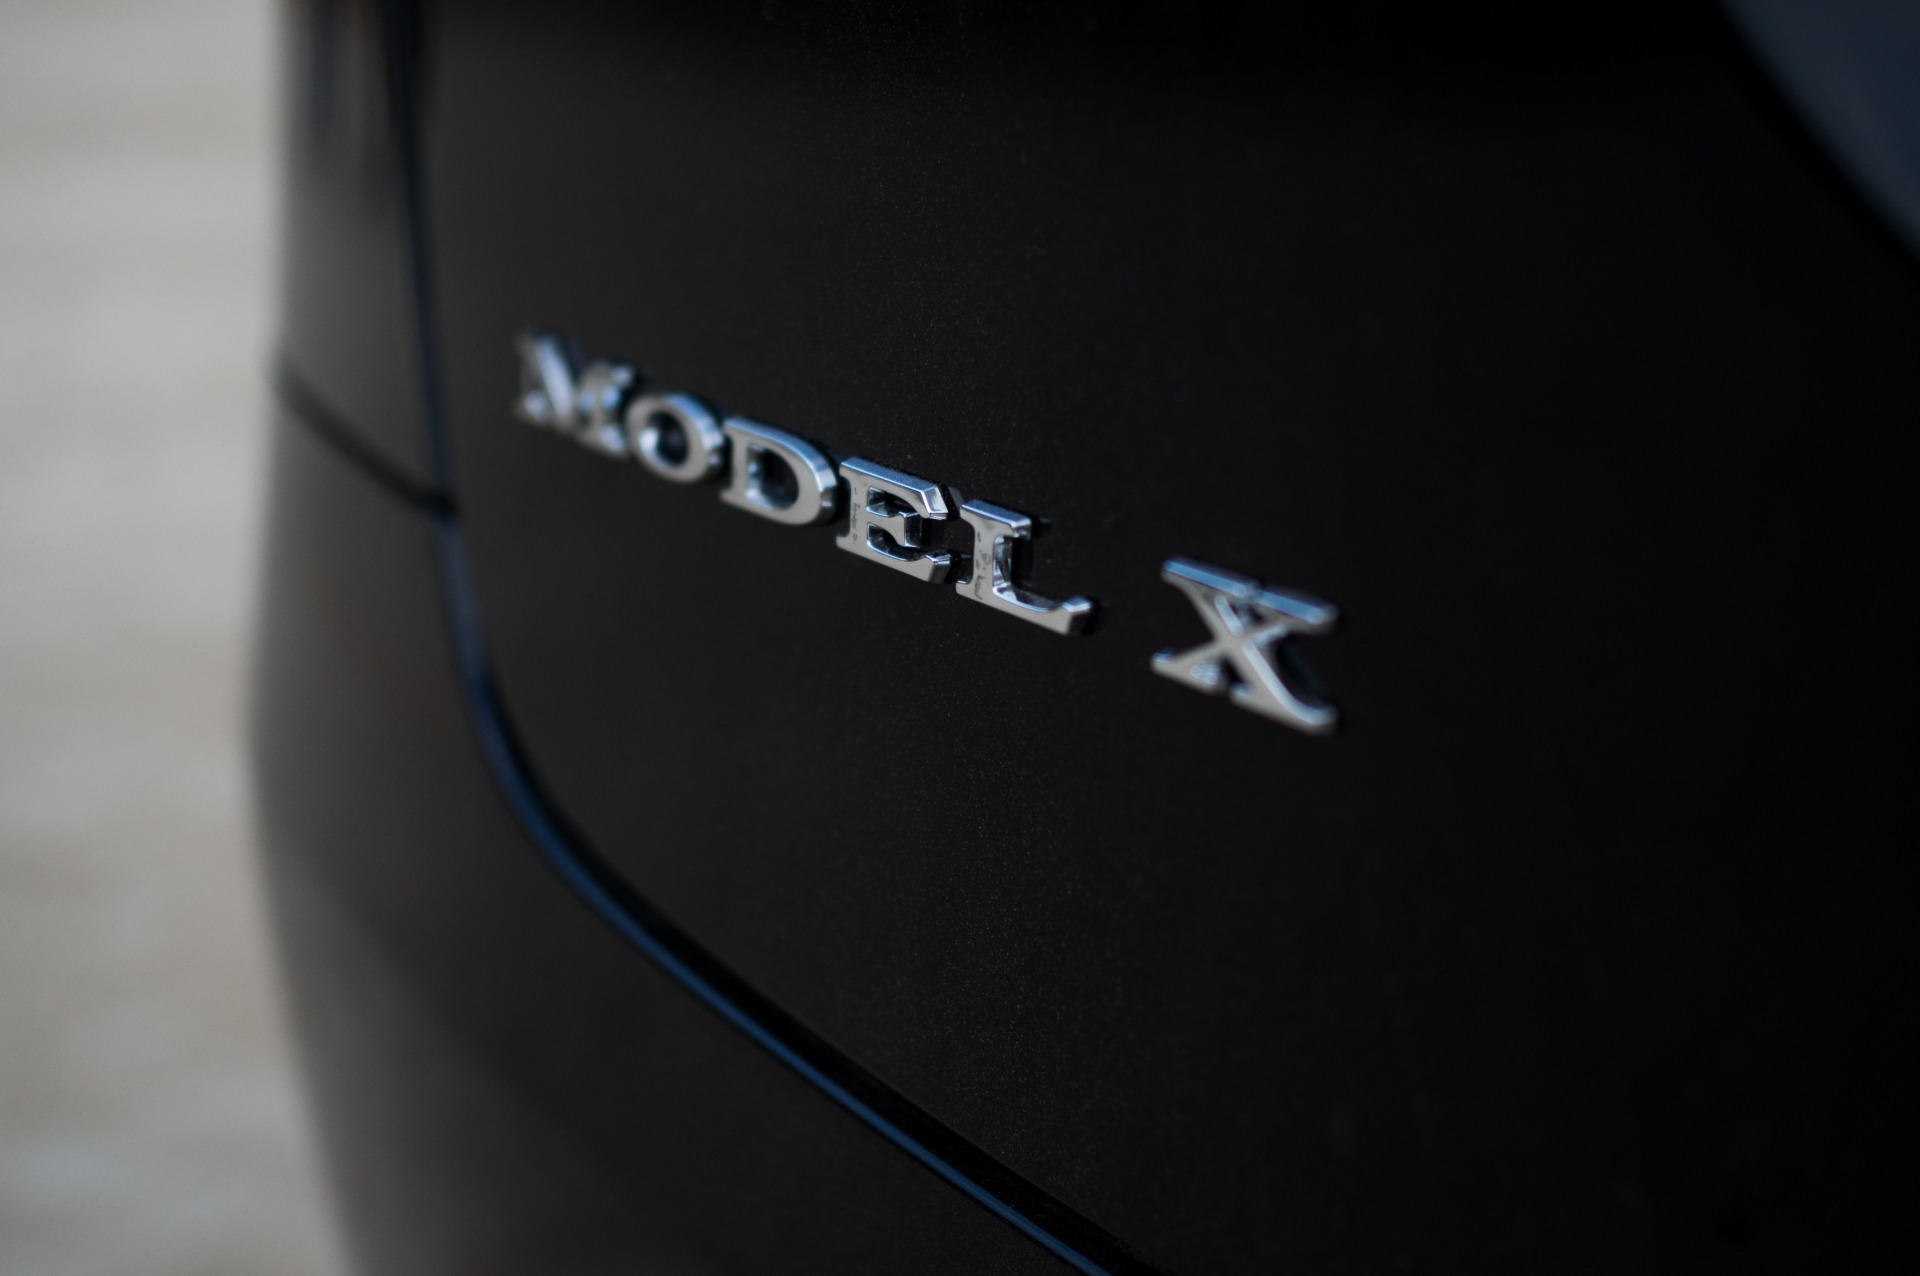 Model X Raven Performance, 6 Seats